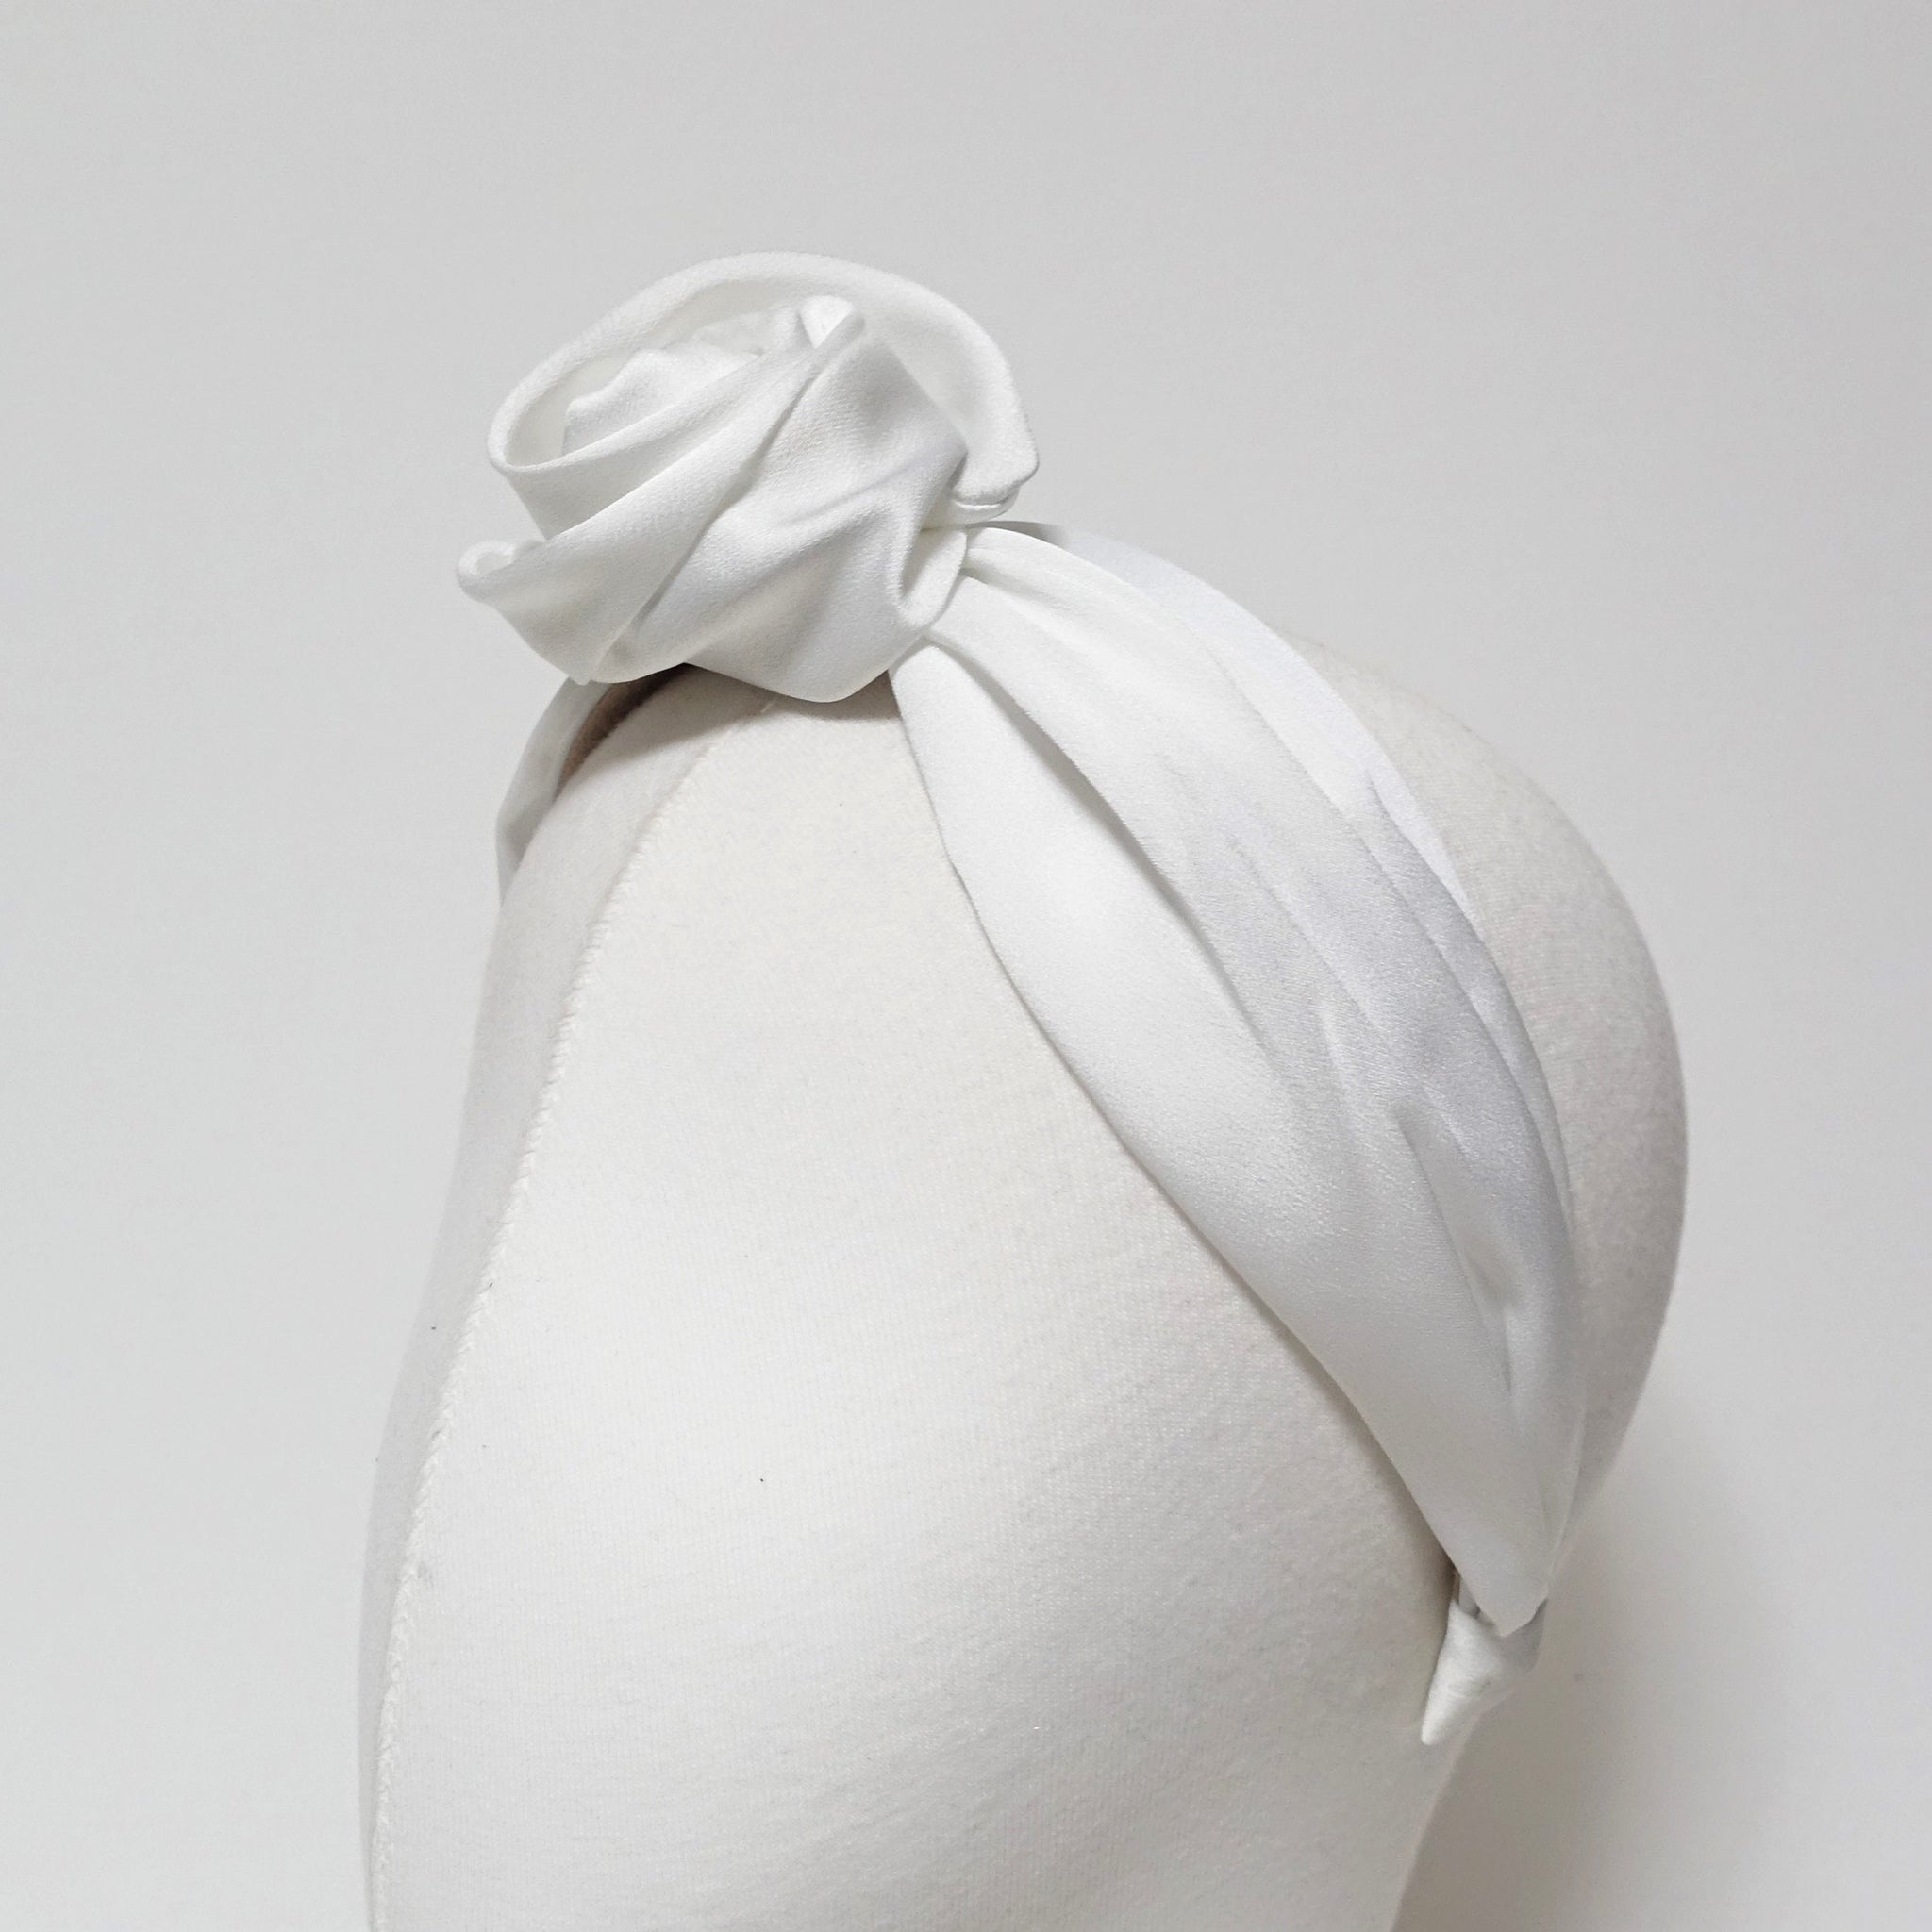 veryshine.com Headband Cream white satin wired flower headband pretty hairband woman hair accessory